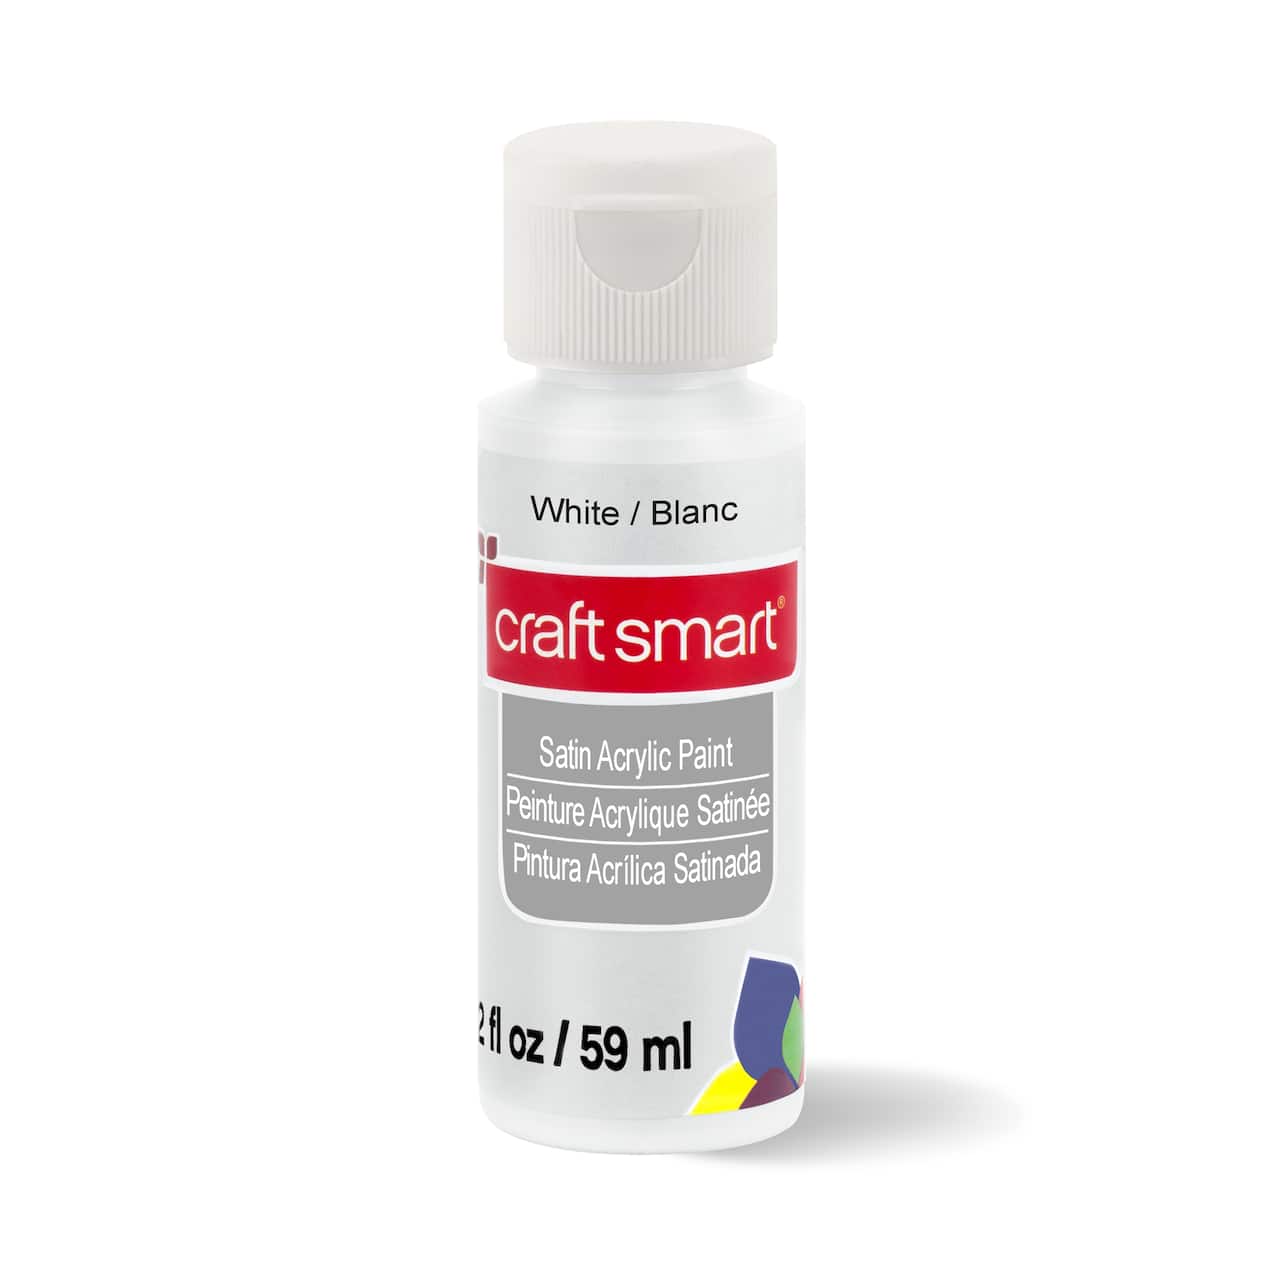 Satin Acrylic Paint by Craft Smart&#xAE;, 2oz.